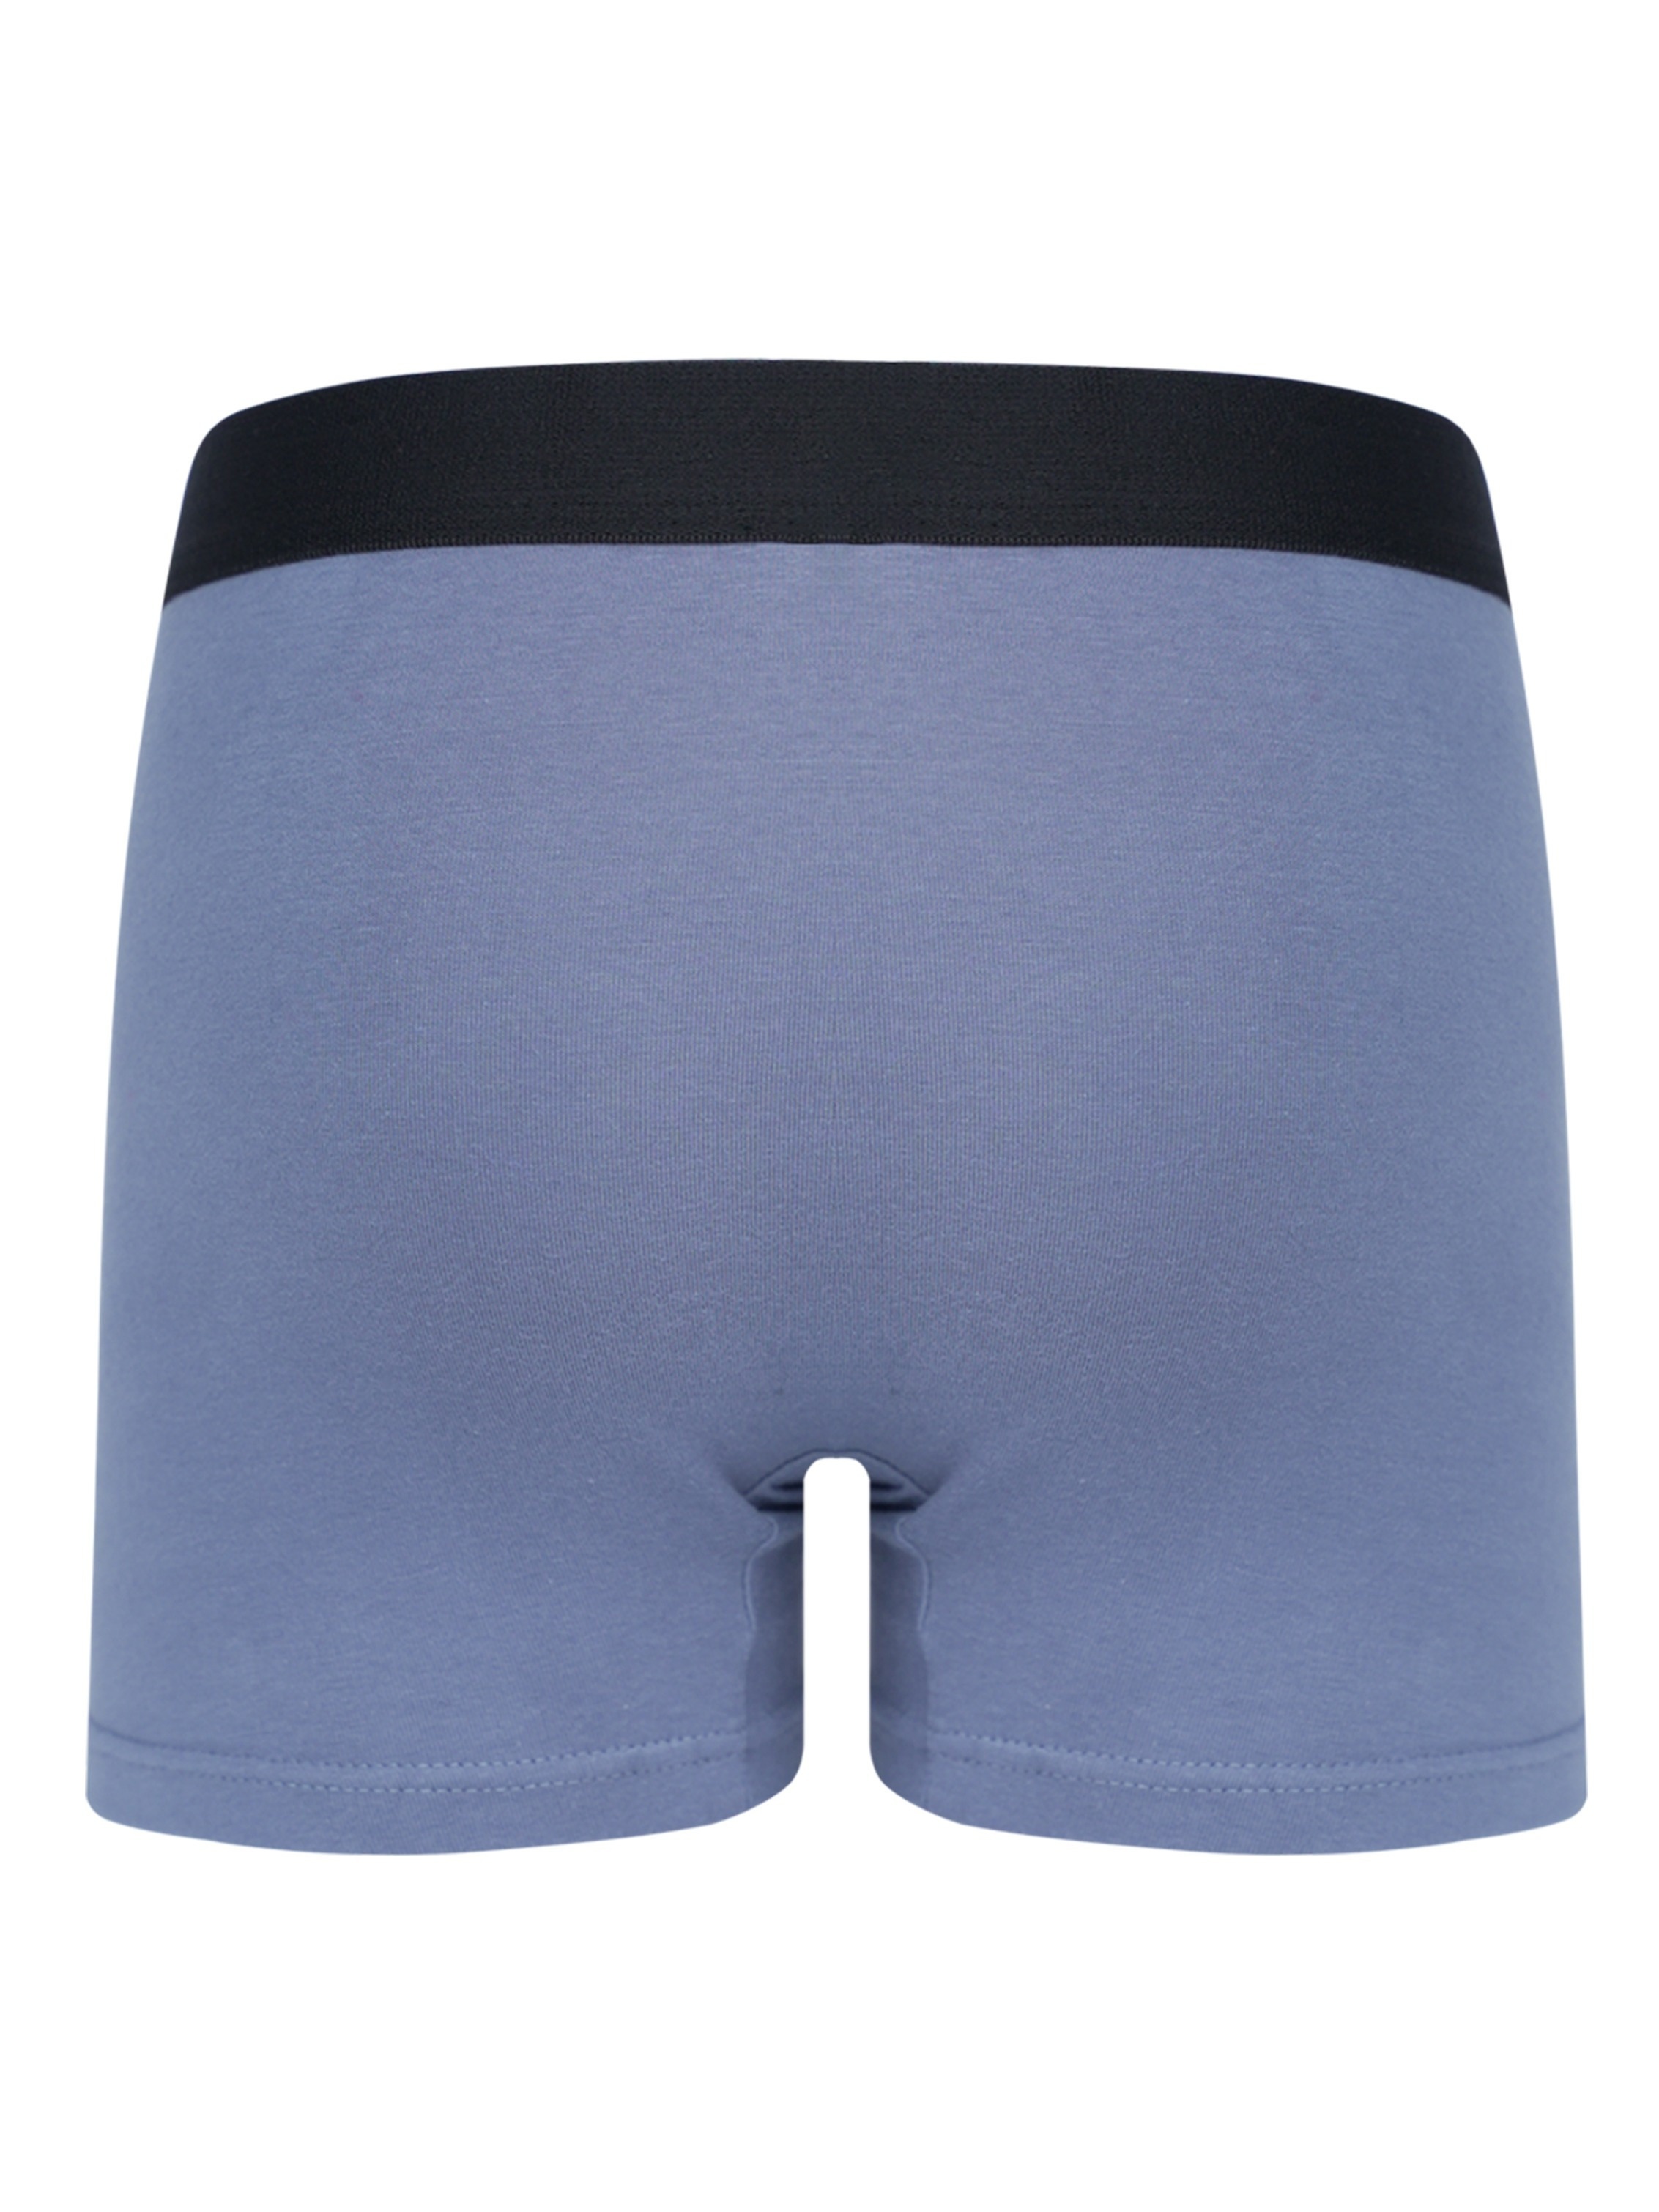 Soft custom printed boxer shorts For Comfort 